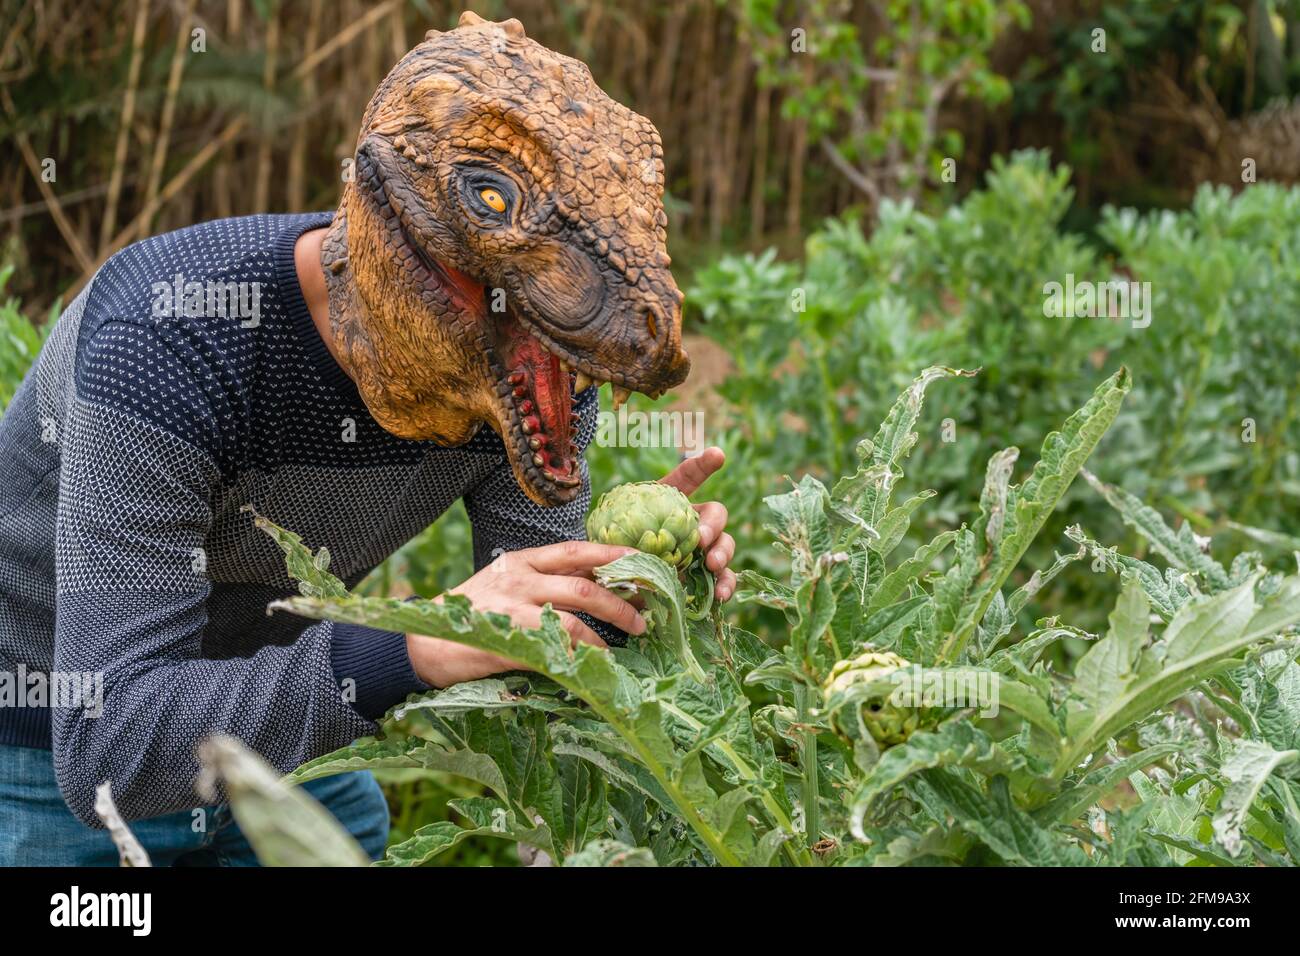 Man with dinosaur animal head mask eating artichokes in vegetables garden. Stock Photo